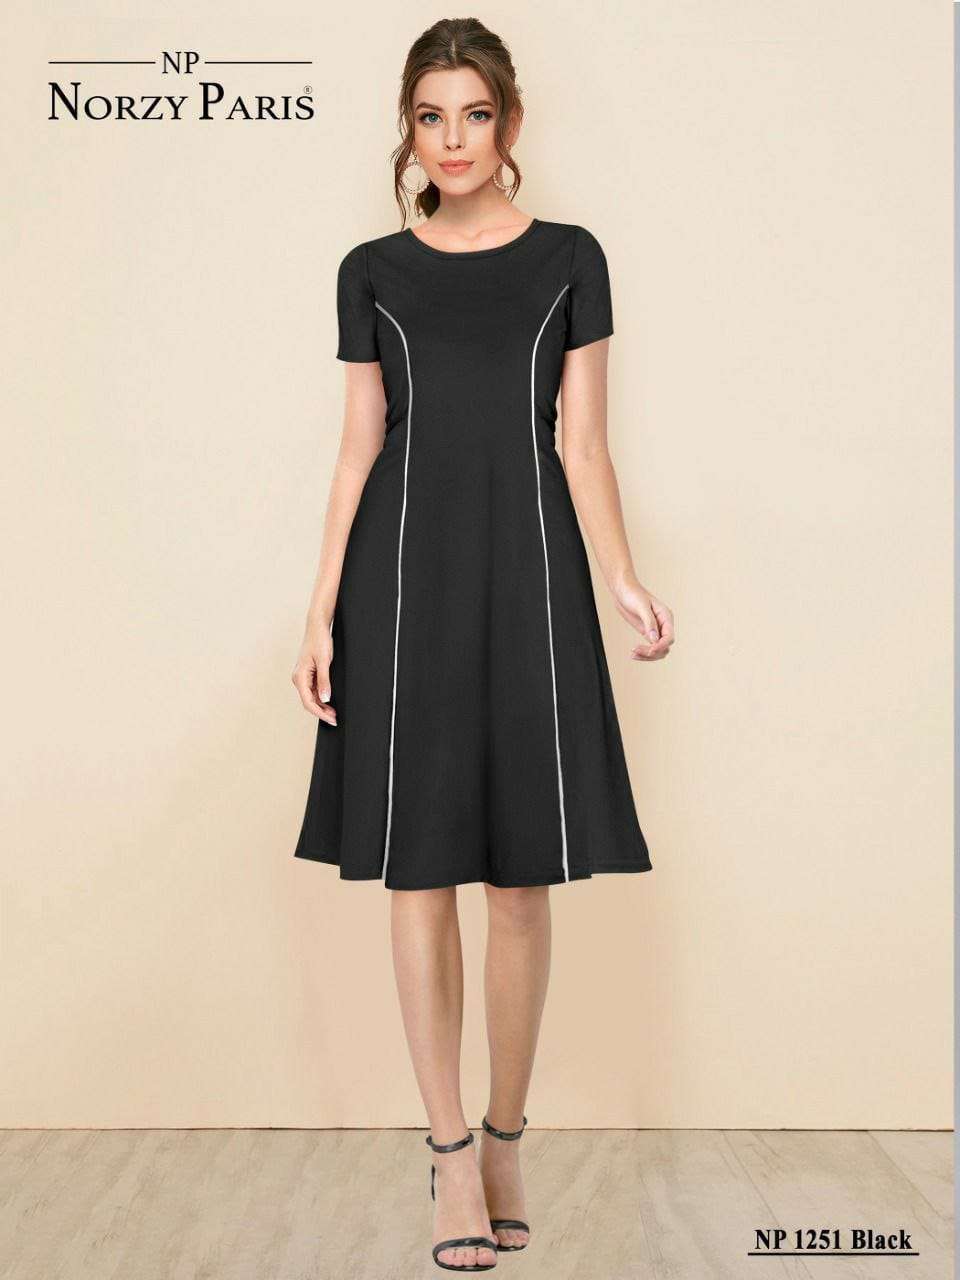 NORZY PARIS NP 1251 Black Designer Western Dress fashion